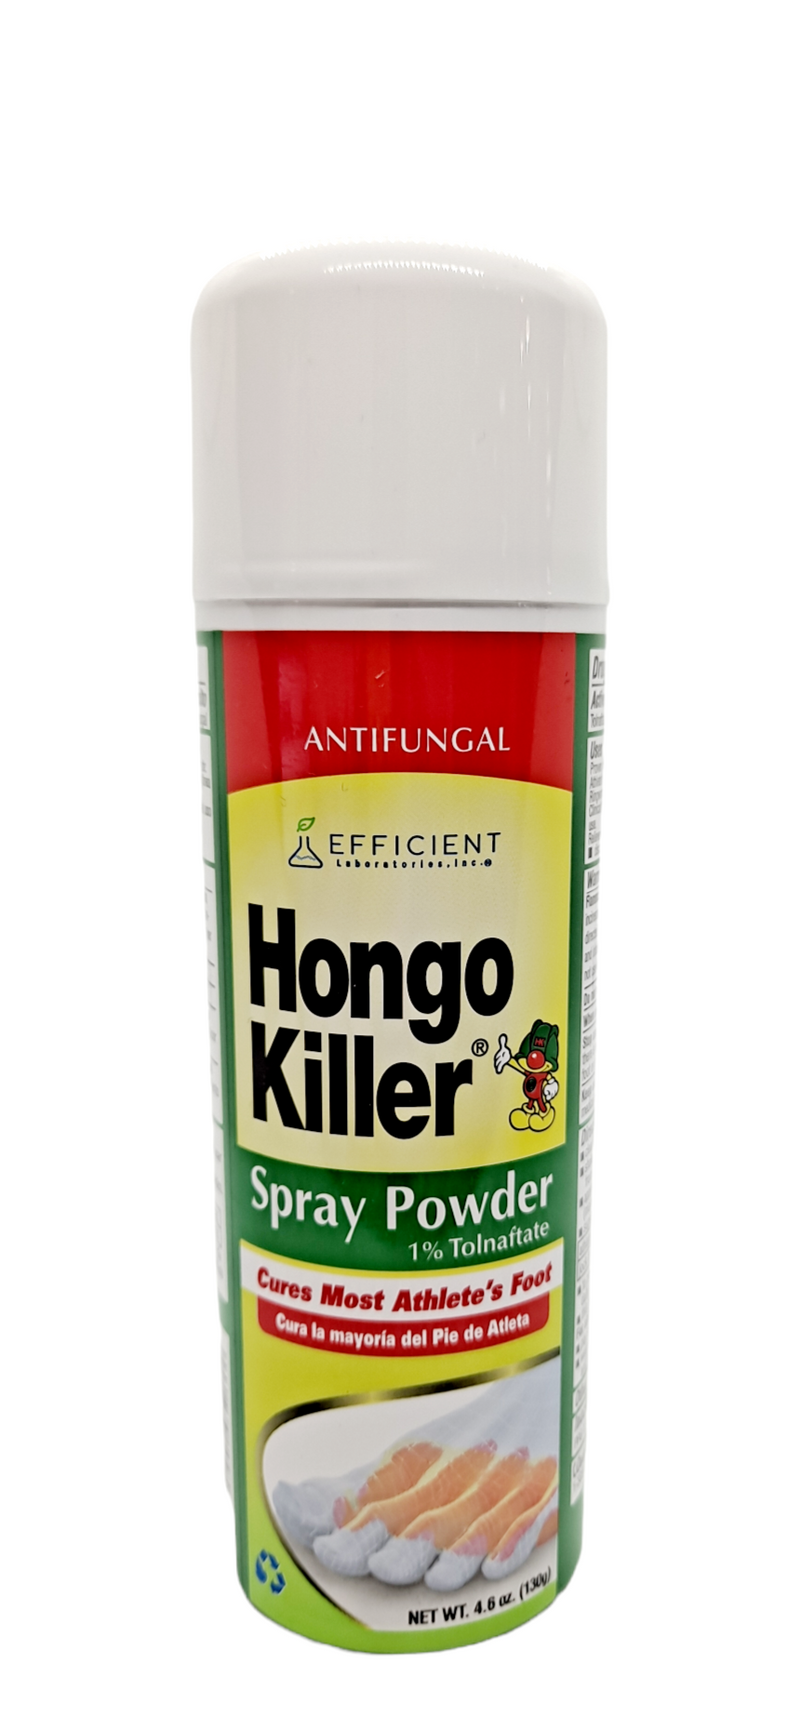 Hongo Killer Spray Powder 1% Tolnaftate/ 4.6 oz